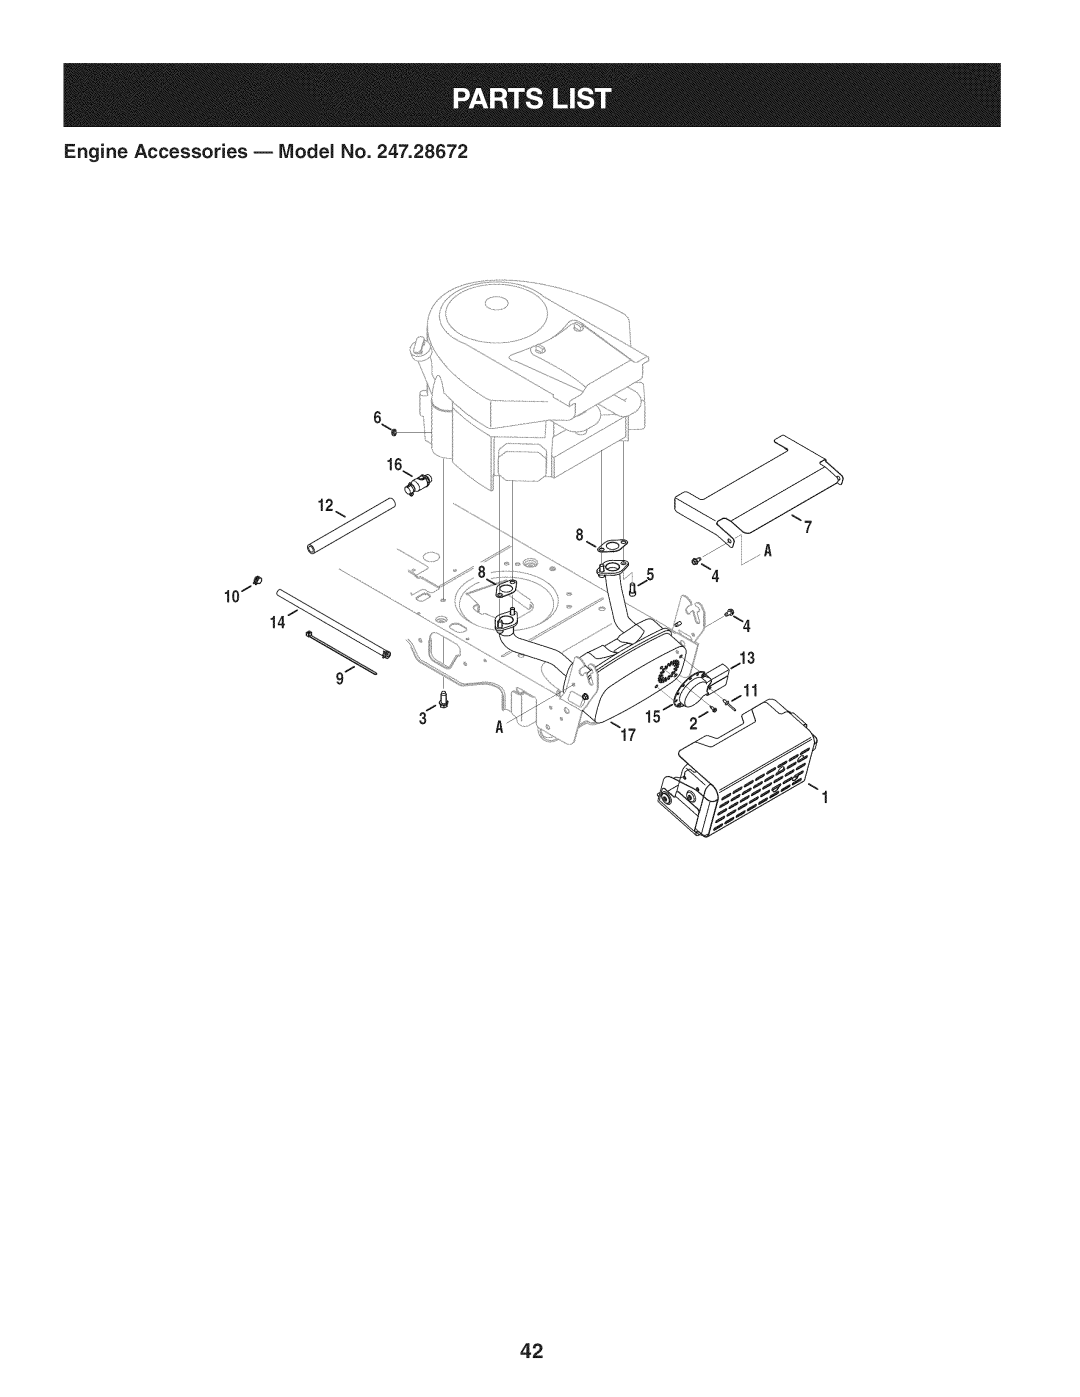 Craftsman PYT 9000, 247.28672 manual Engine Accessories B IViodel No 